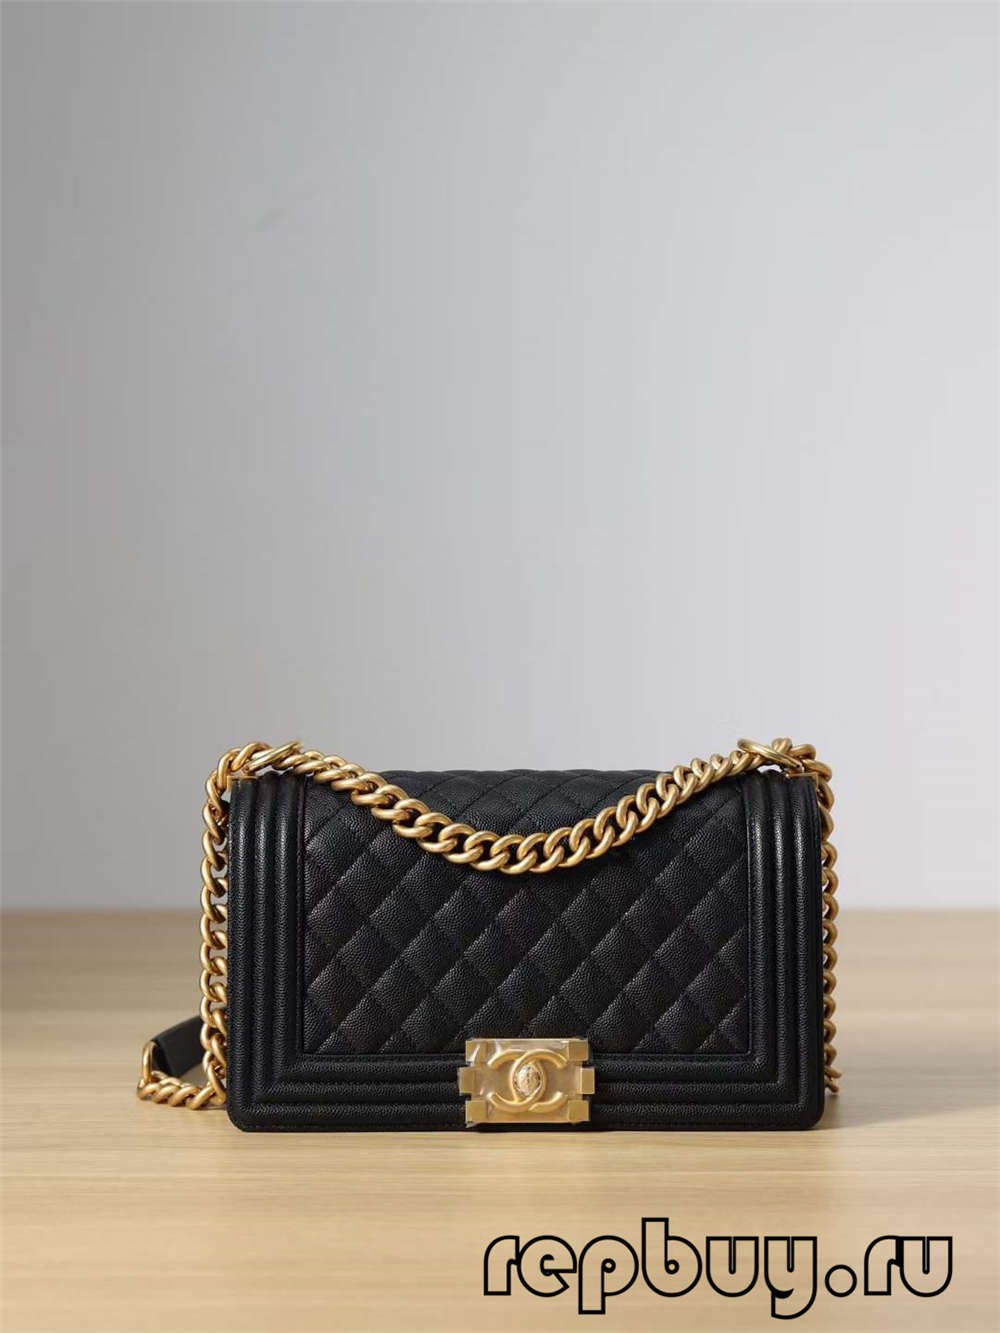 Chanel Leboy Top Replica Handbag Matsakaici Zinare tare (2022 Edition) -Mafi kyawun ingancin Jakar Louis Vuitton Bag Online Store, Replica designer bag ru